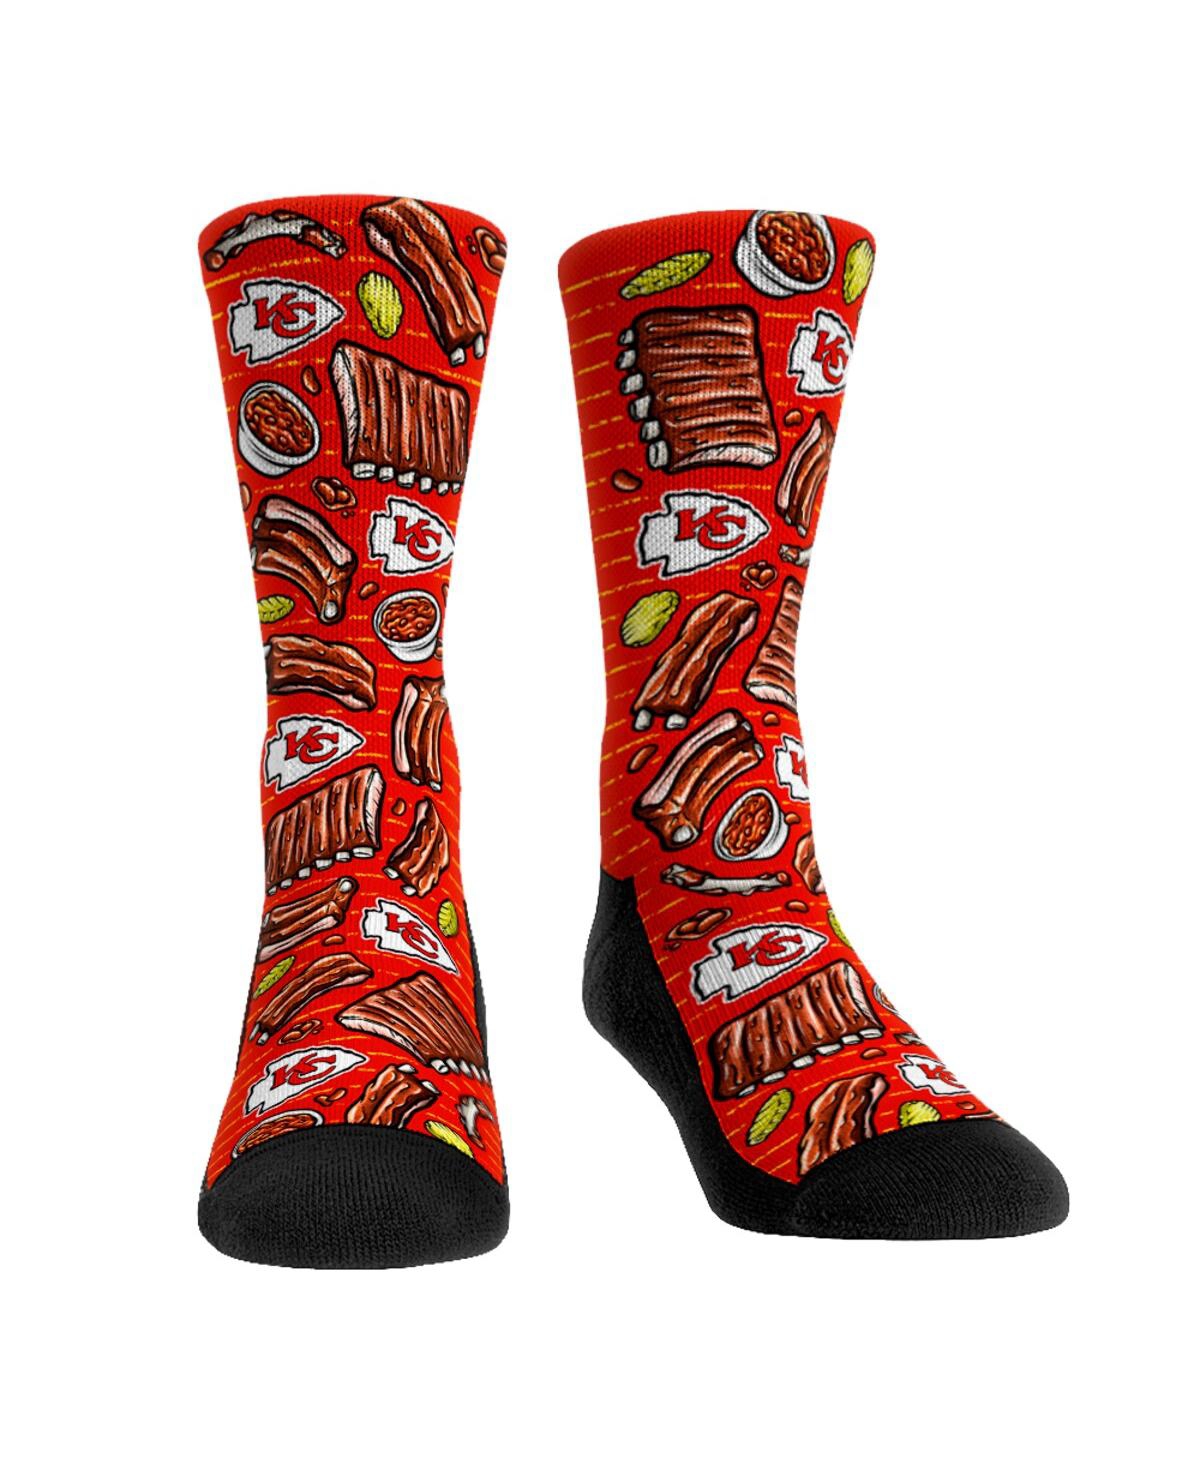 Rock 'em Men's Rock Em Socks Kansas City Chiefs Localized Food Crew Socks In Red